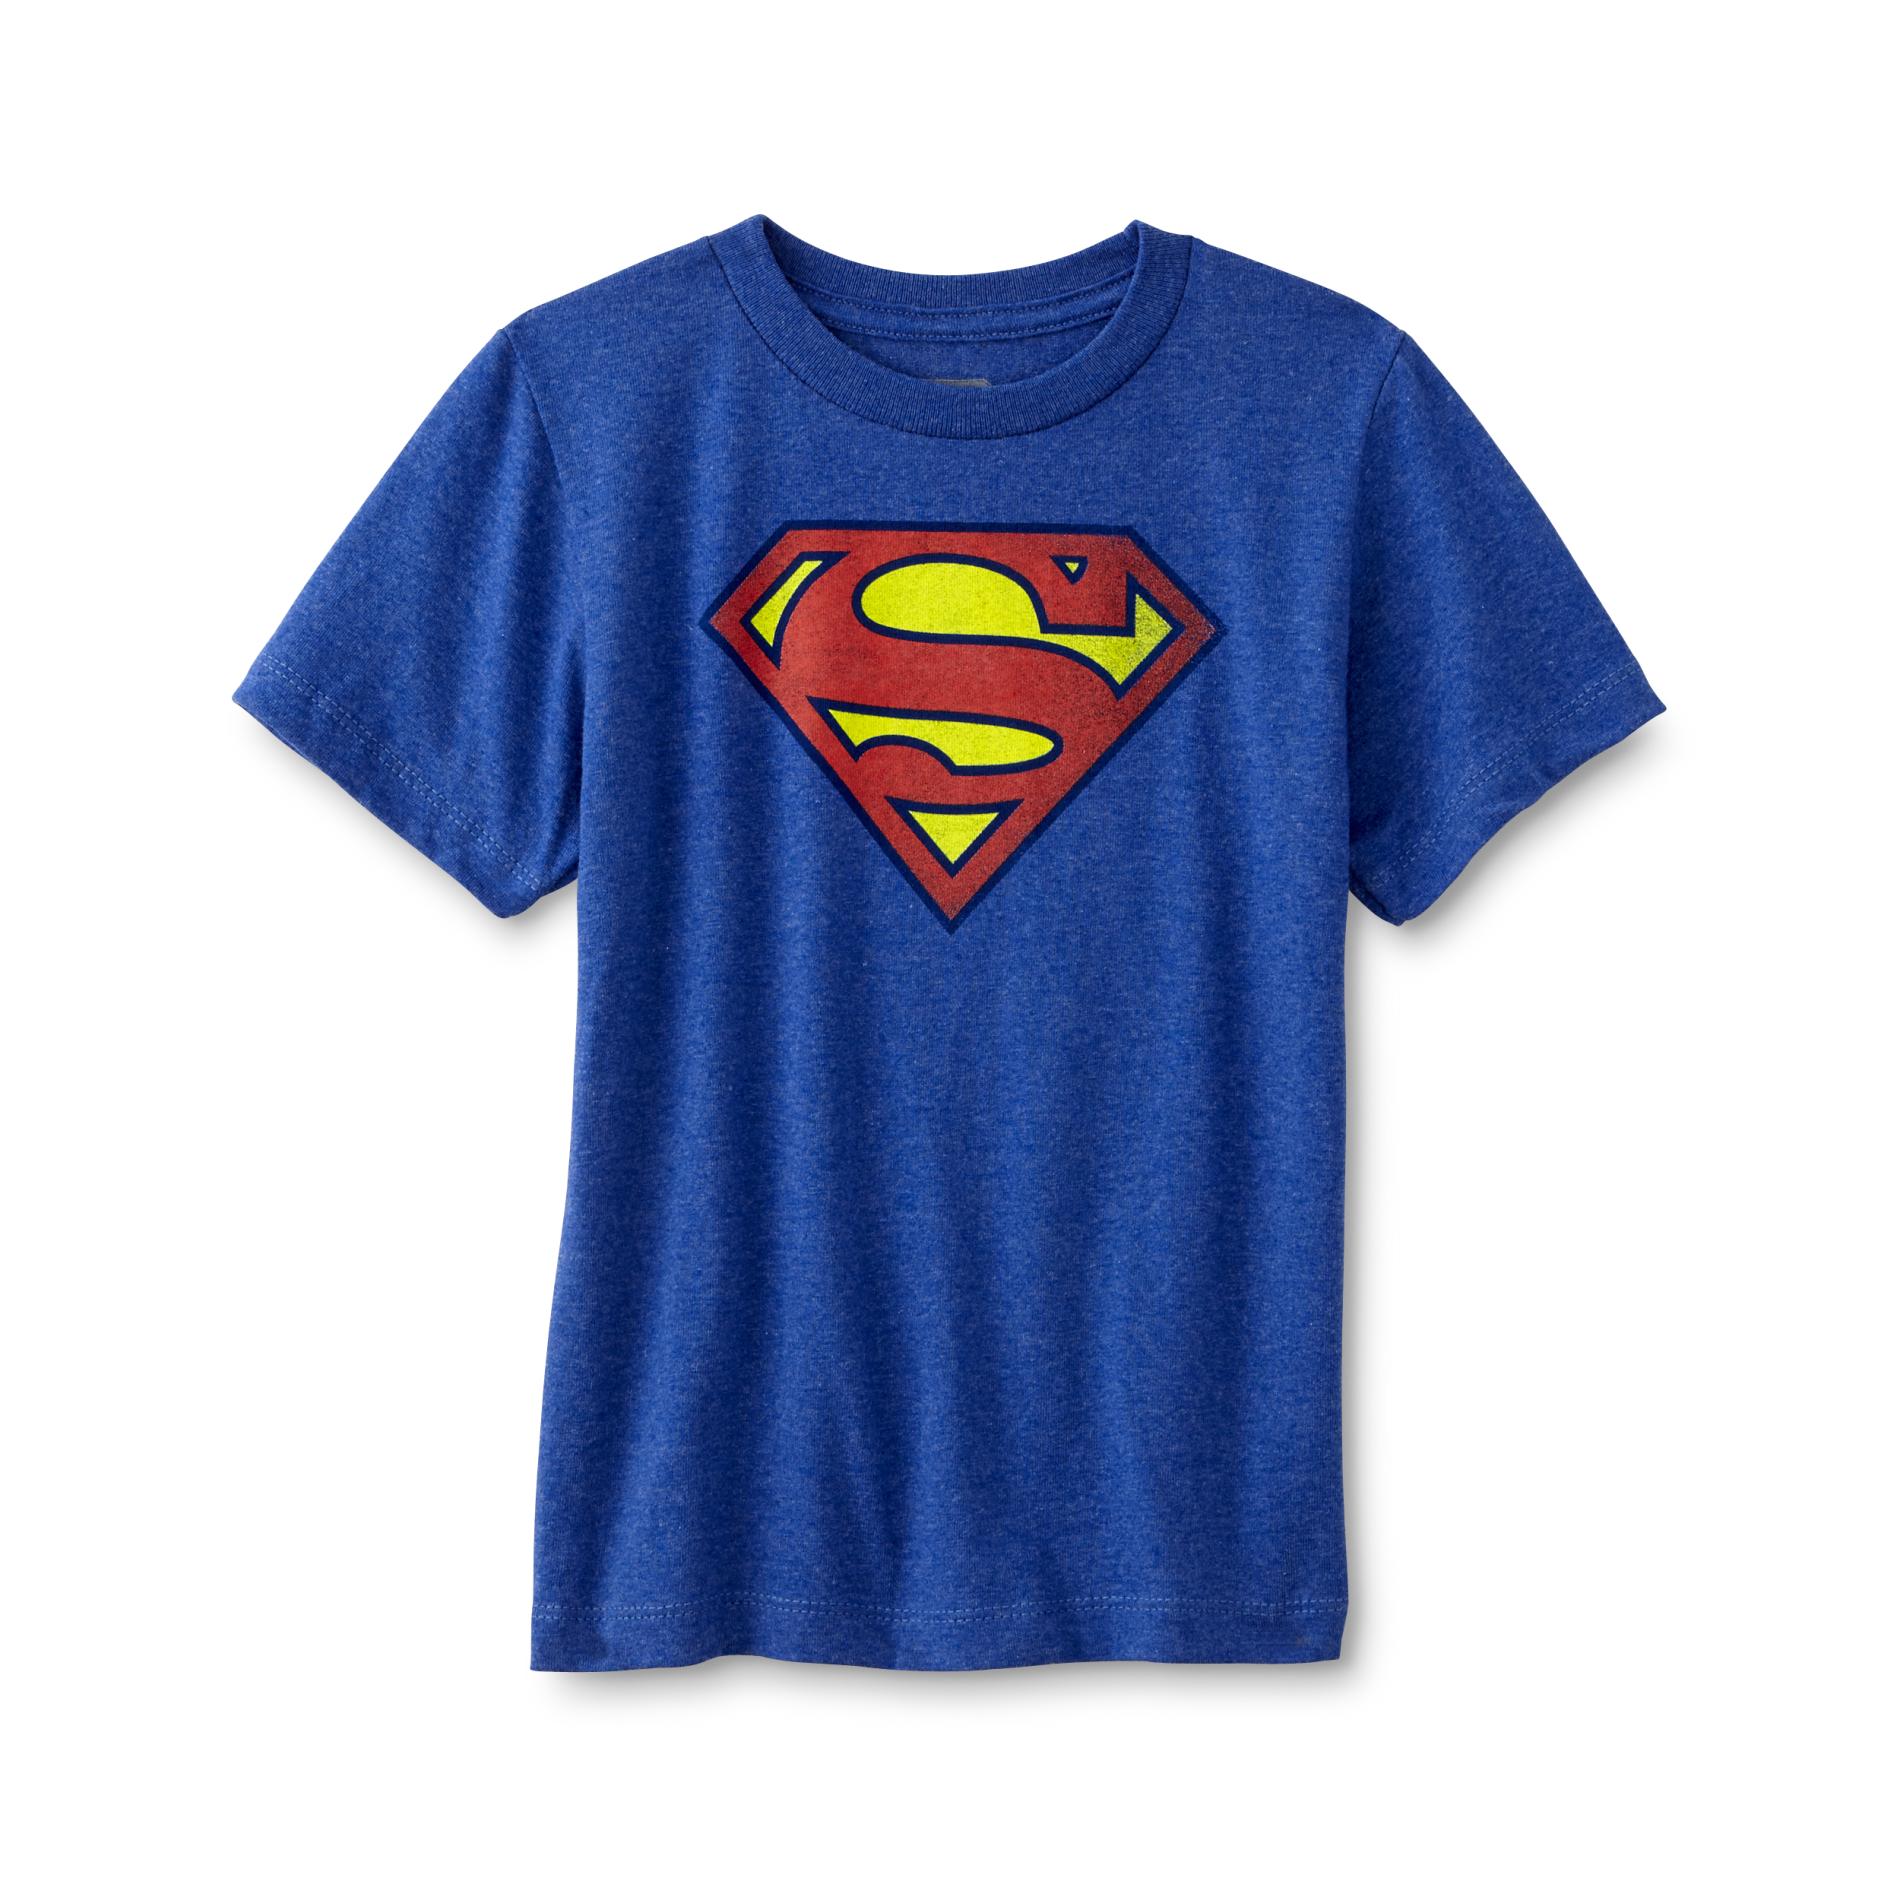 DC Comics Superman Toddler Boys' Graphic T-Shirt